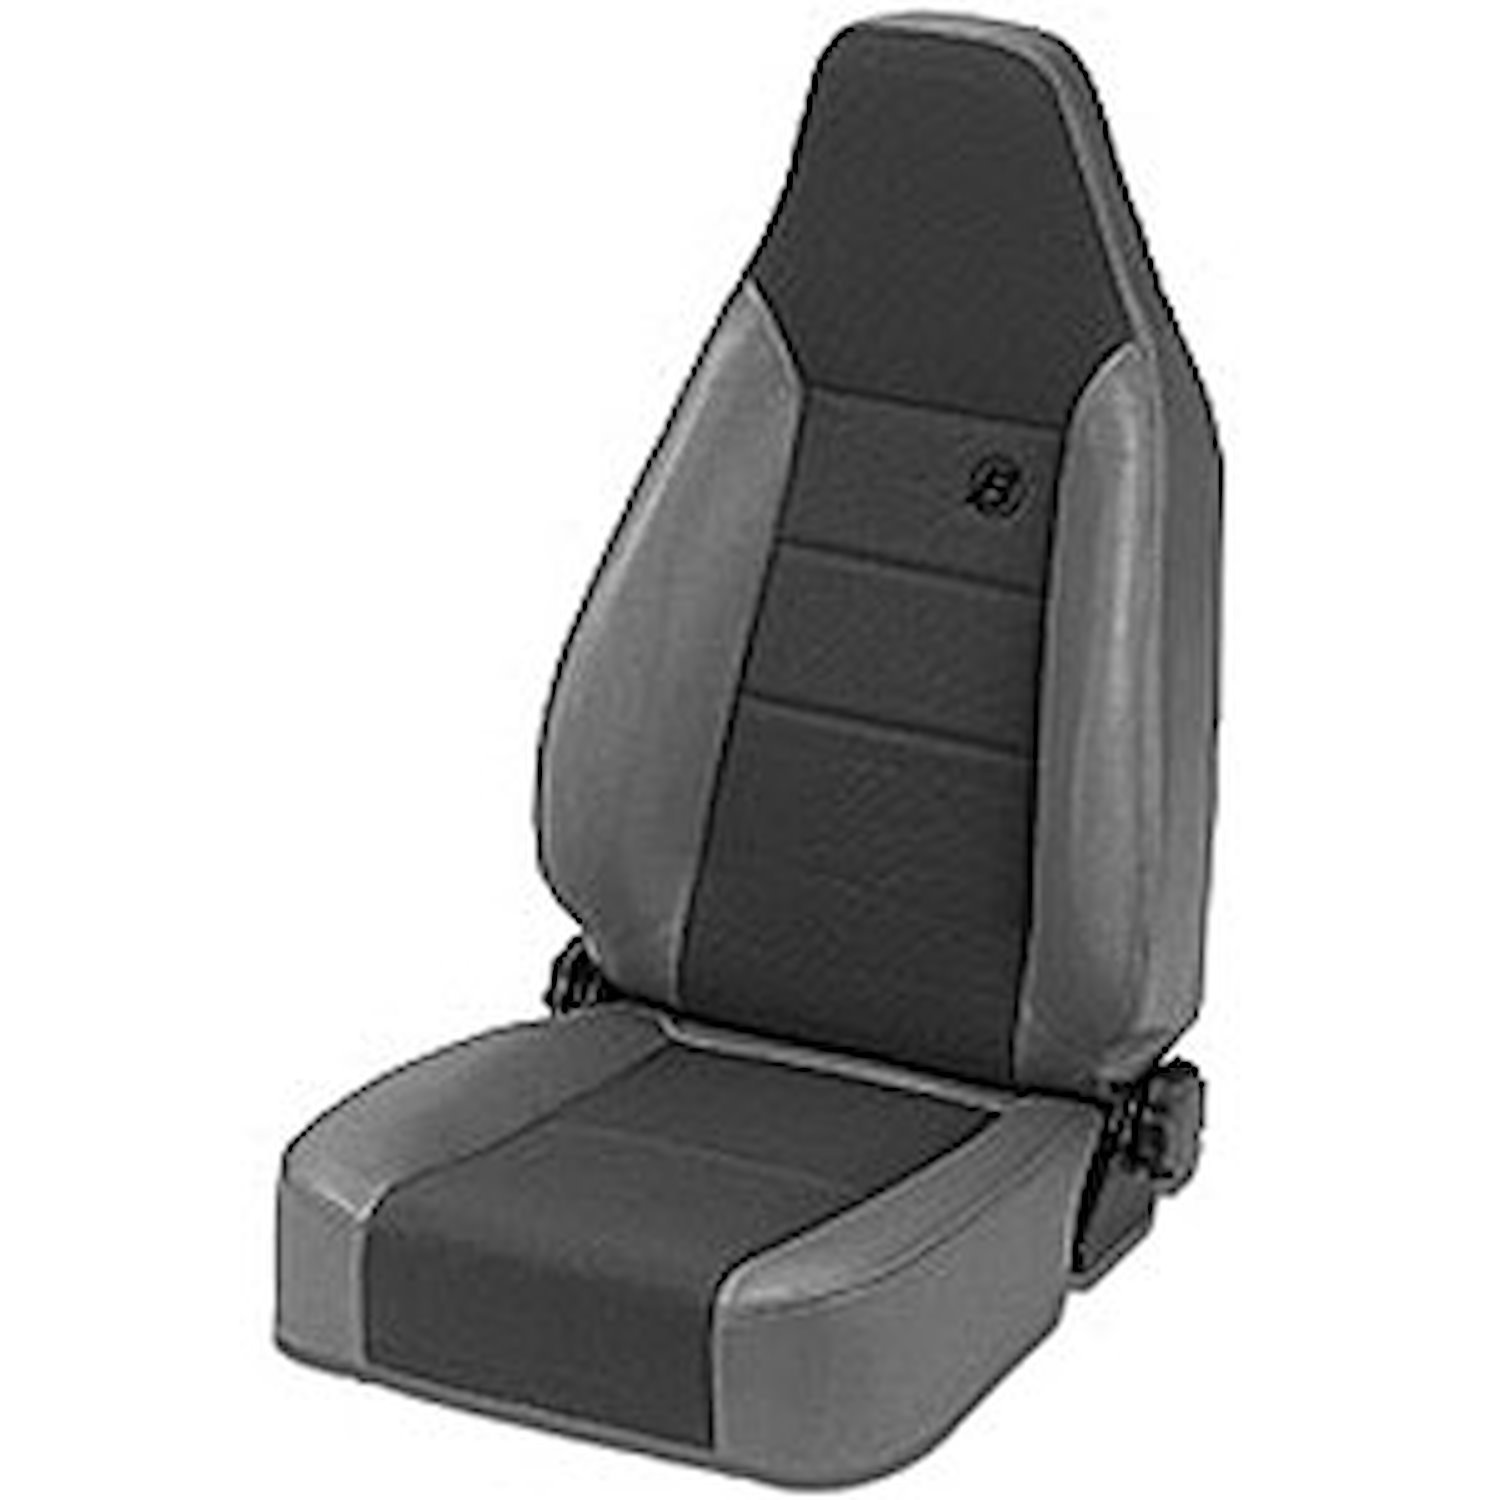 Trailmax II Sport Seat, Charcoal, Front, High-Back, Vinyl